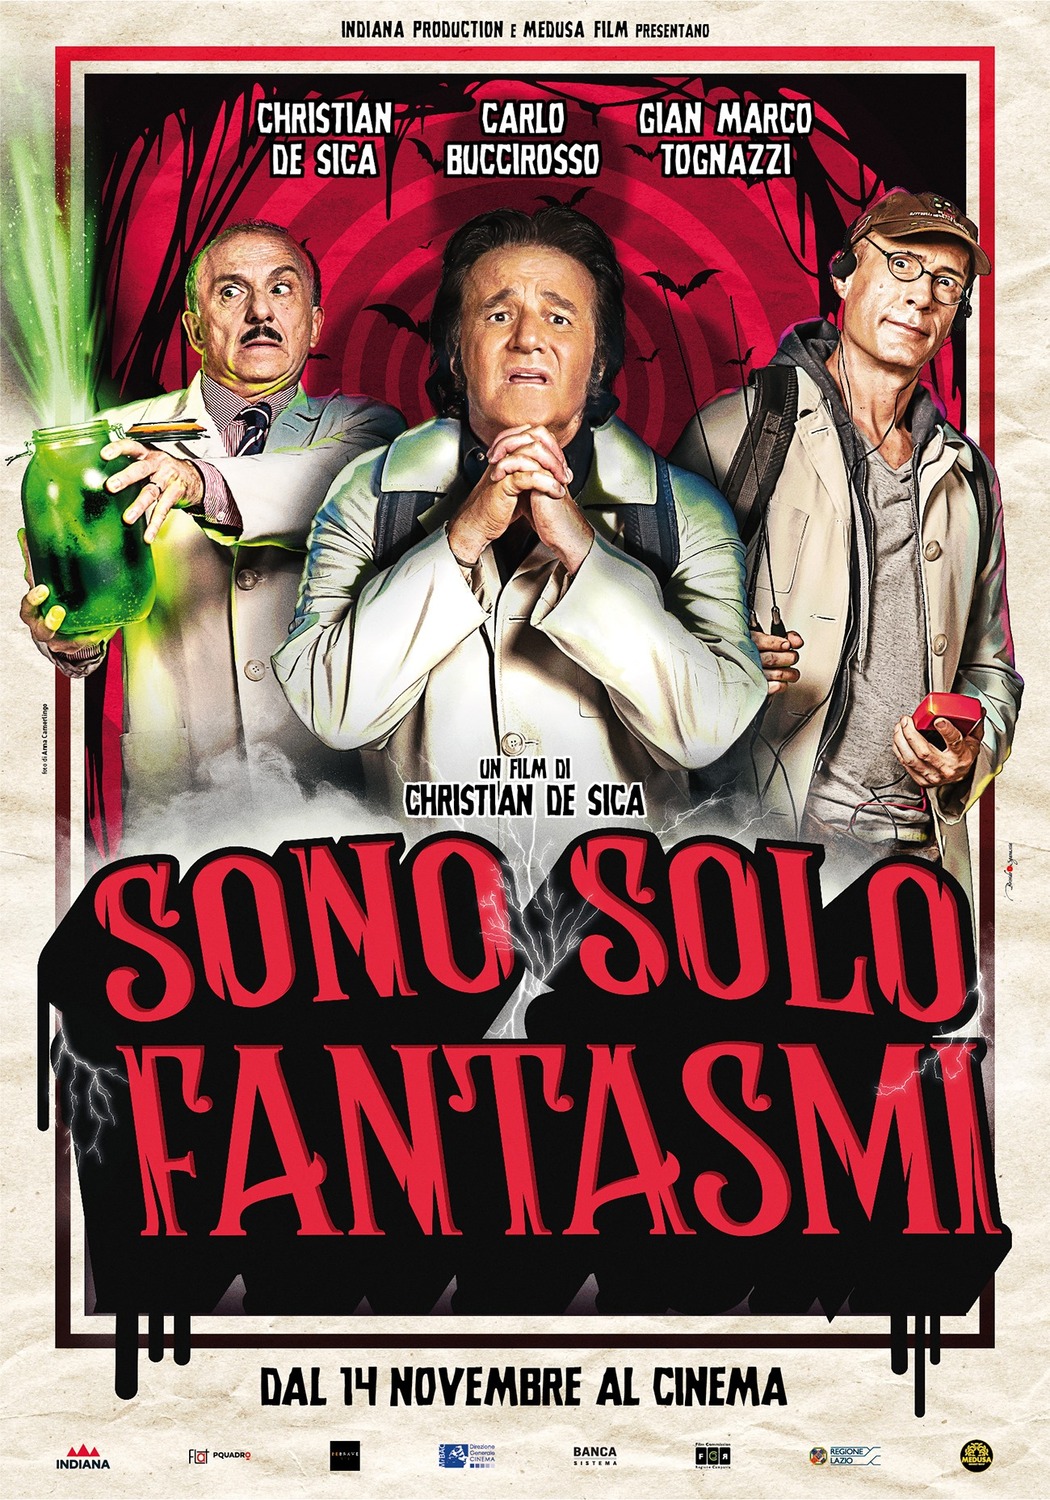 Extra Large Movie Poster Image for Sono solo fantasmi 